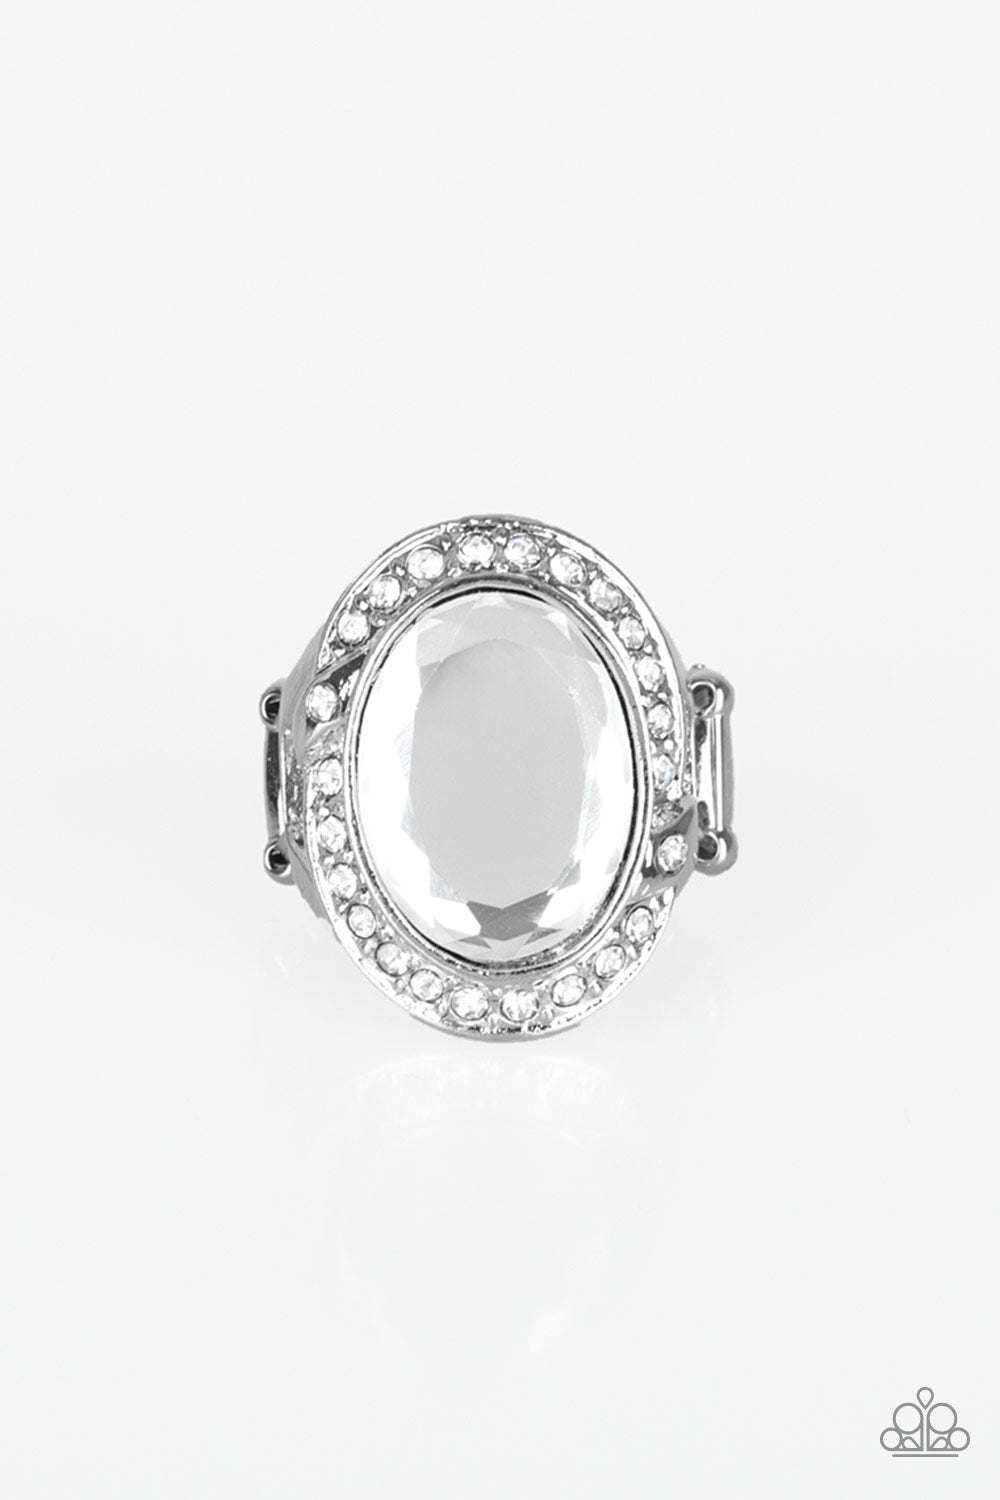 Queen Scene - White rhinestone ring